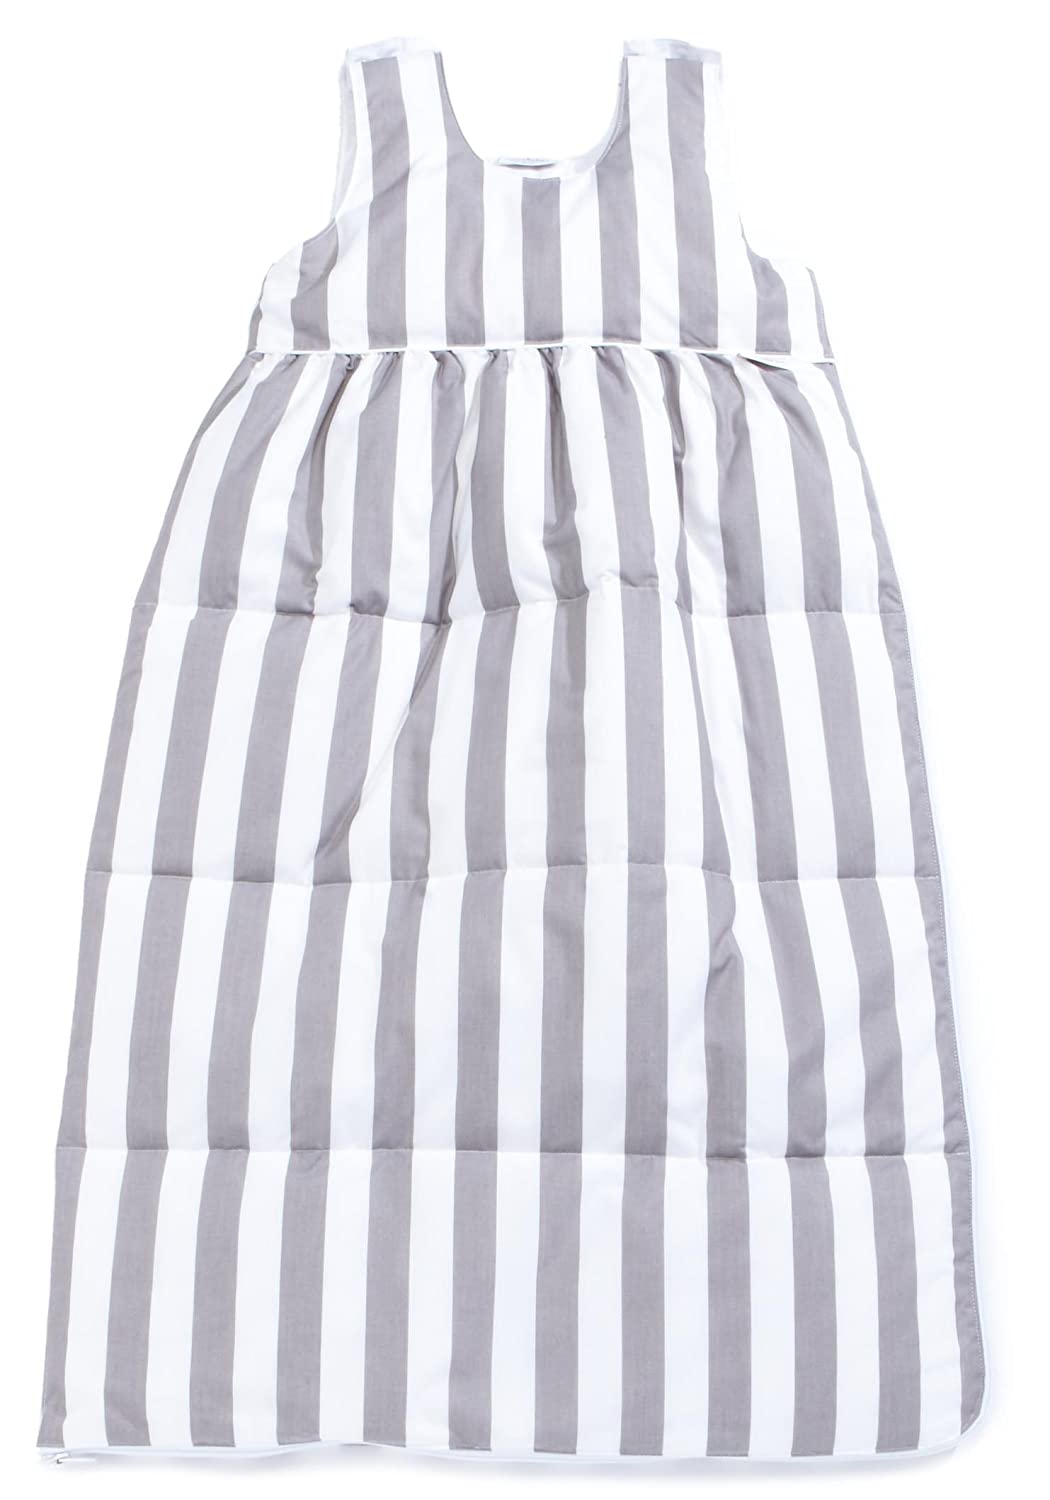 Tavolinchen 40/105-206-110 Sleeping Bag Down Material 90 cm Wide White/Grey Stripes